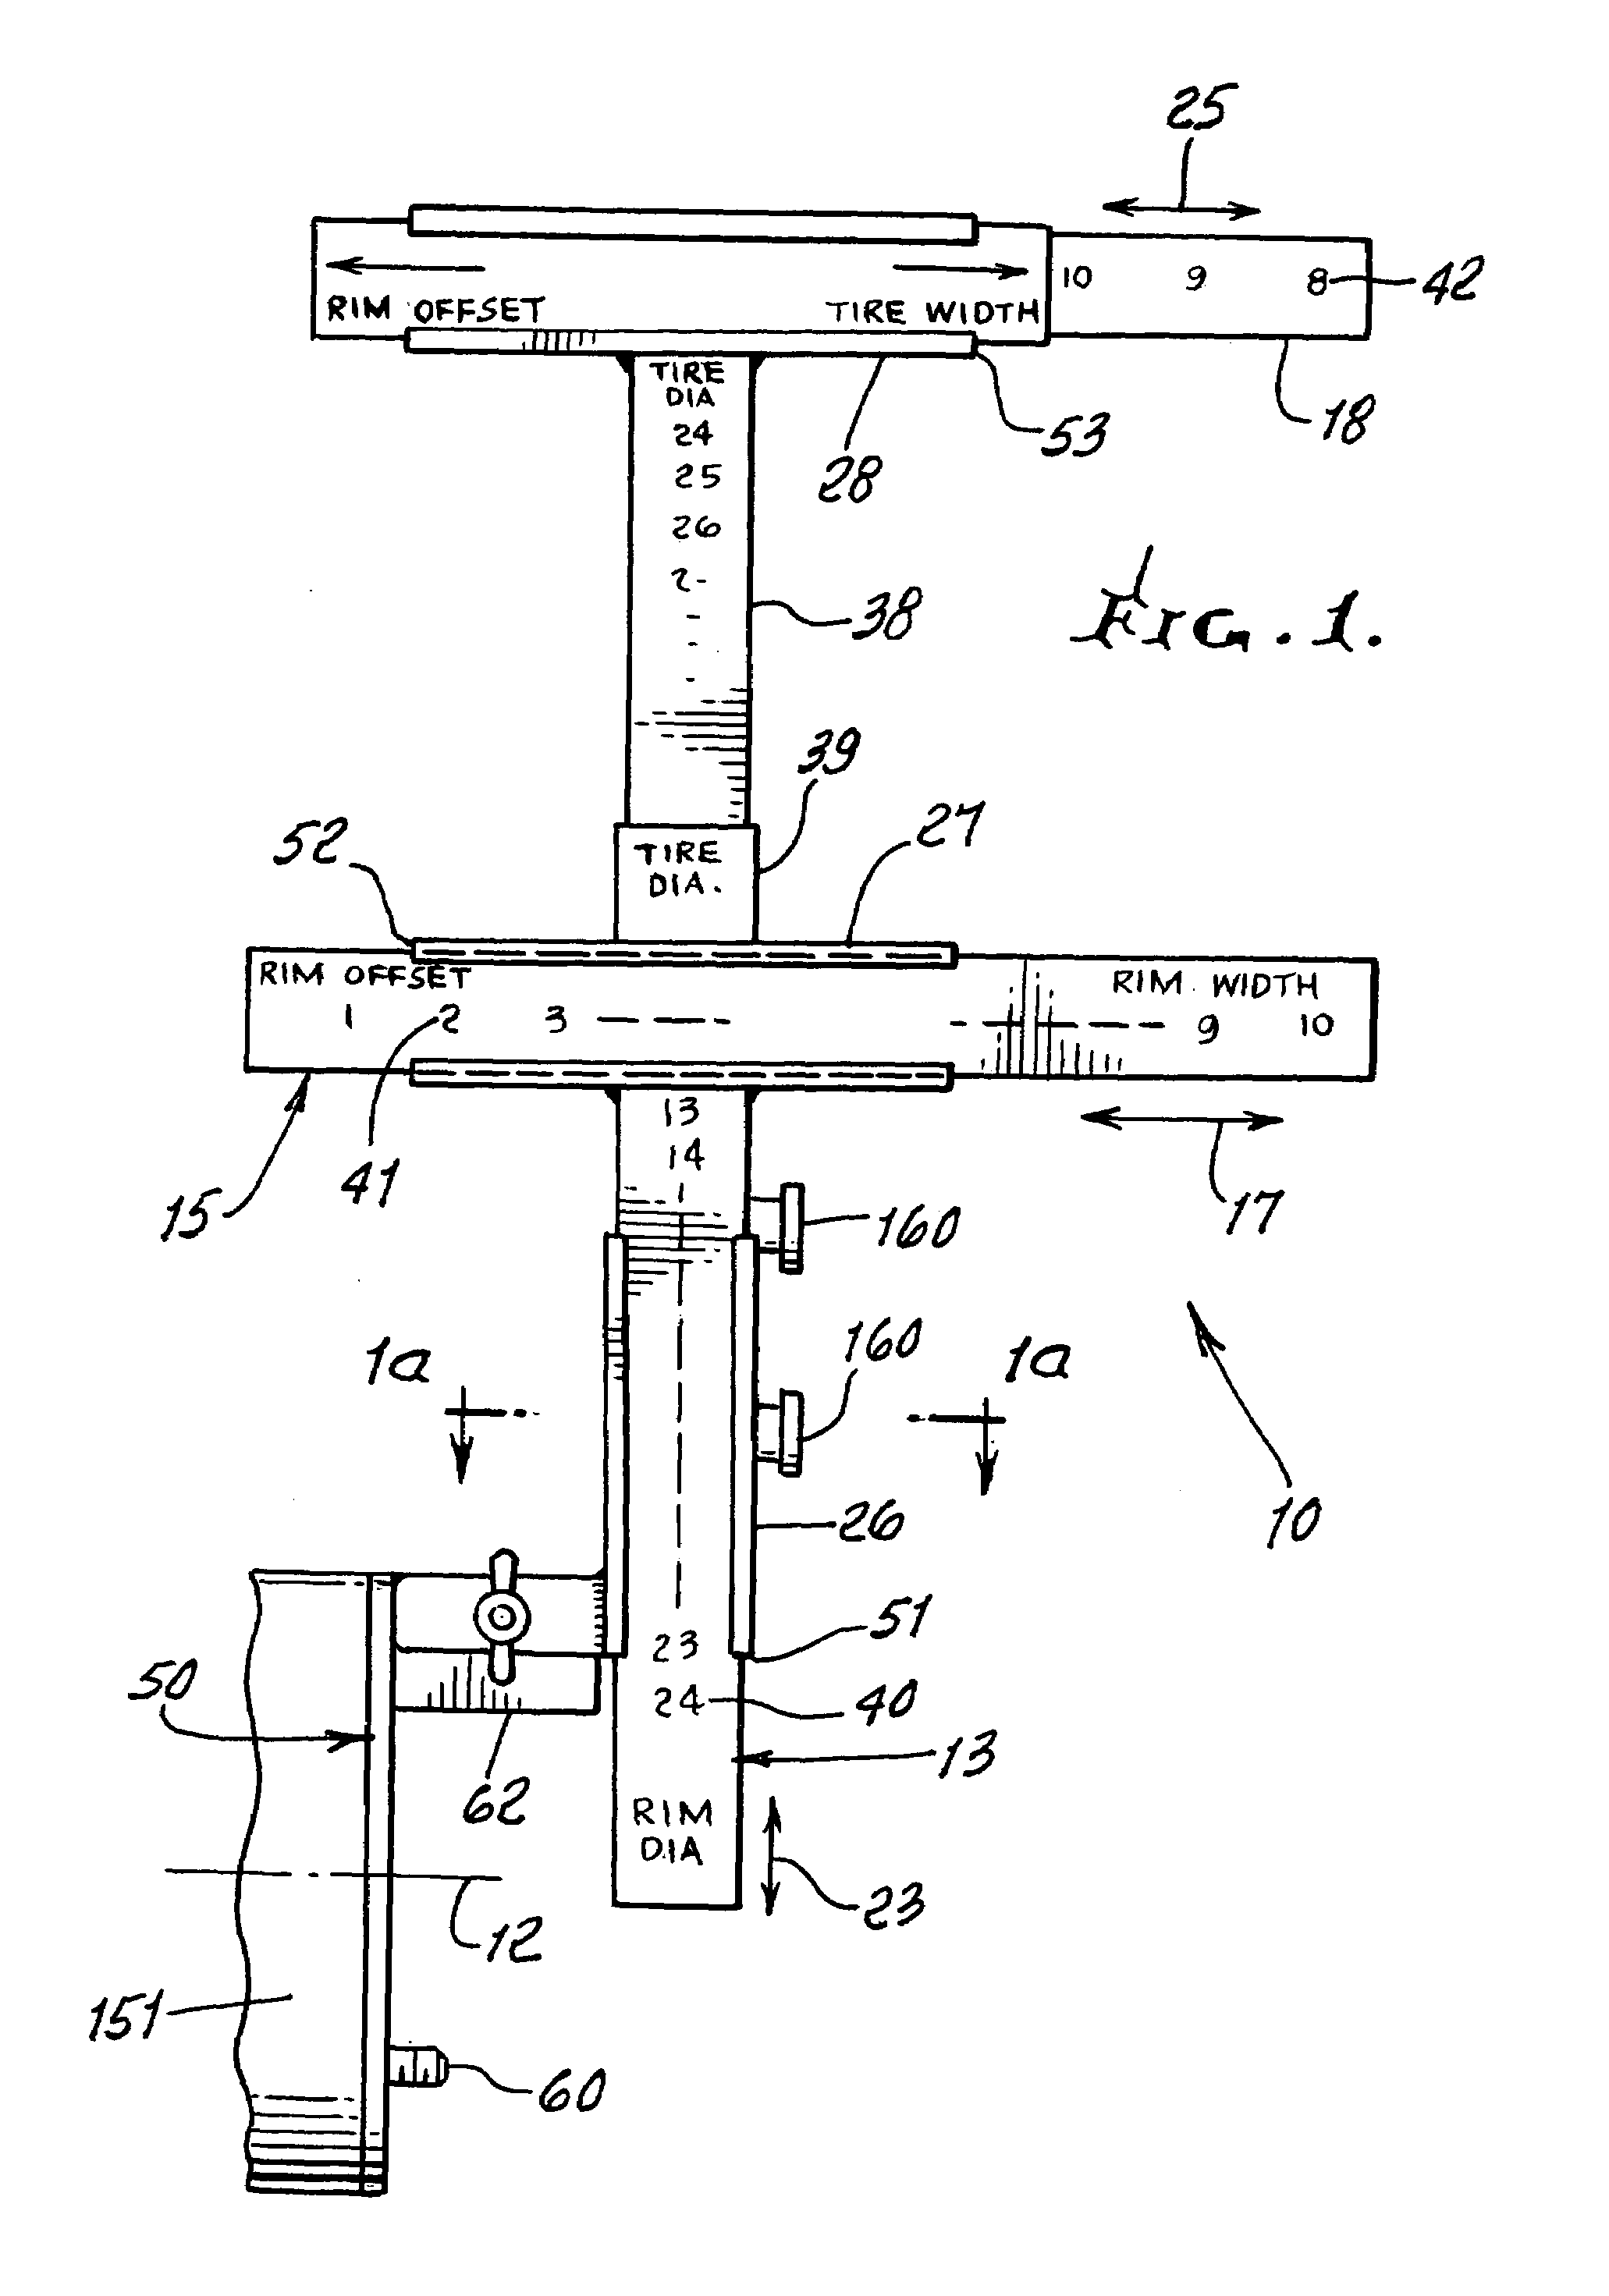 Gauging apparatus and method